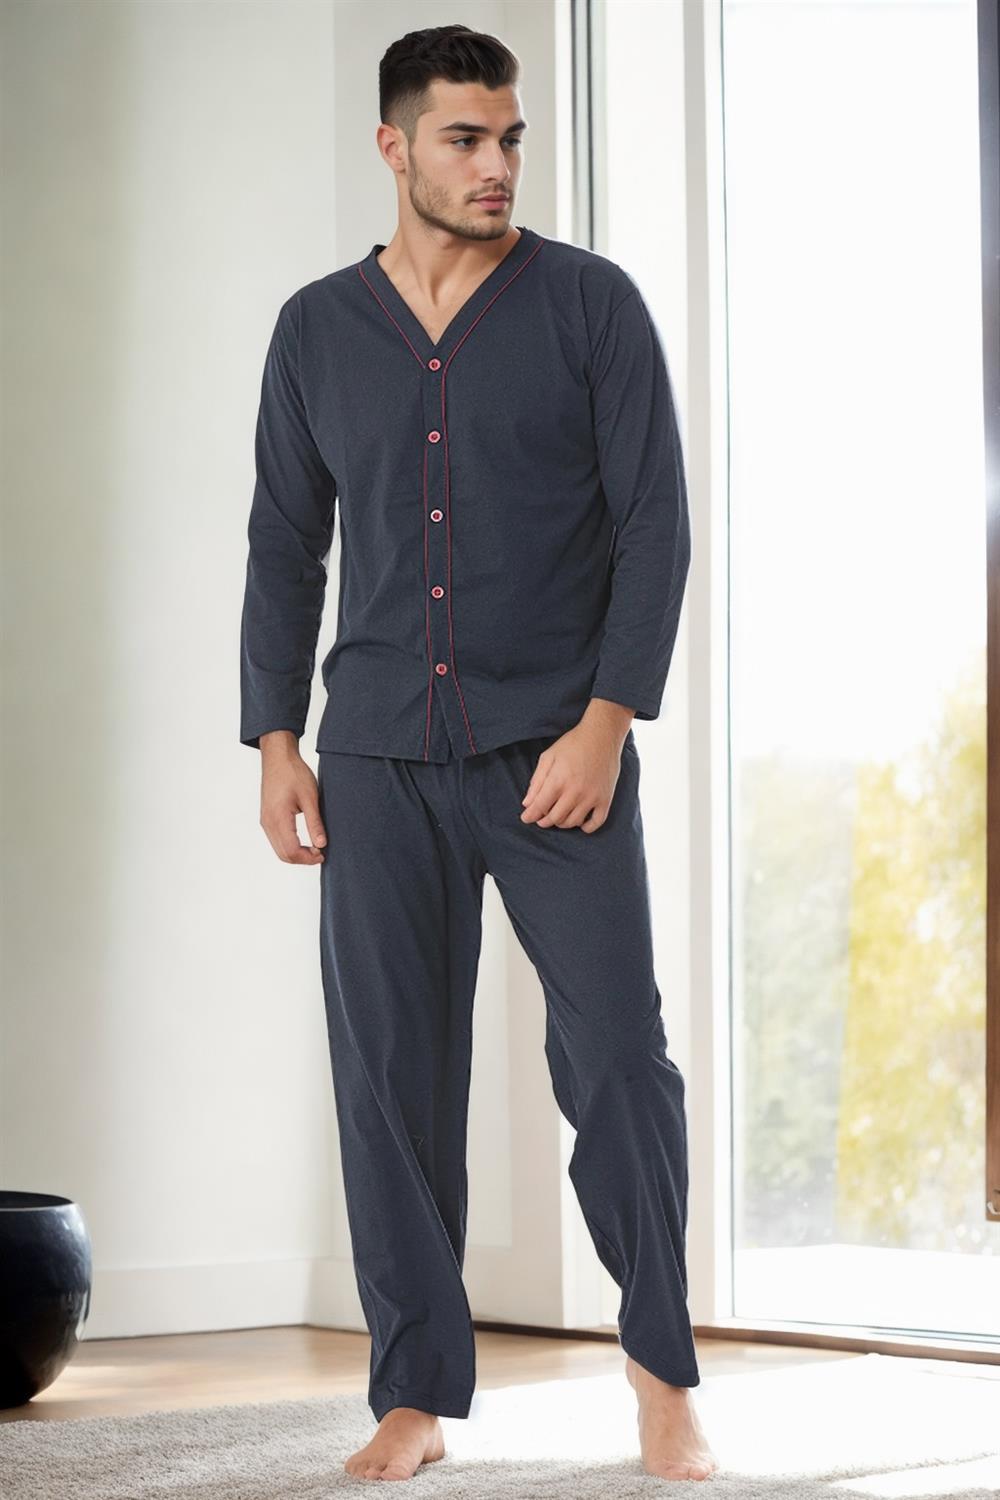 J4425 Dewberry Mens Buttoned Long Sleeve Pyjama Set-NAVY BLUE